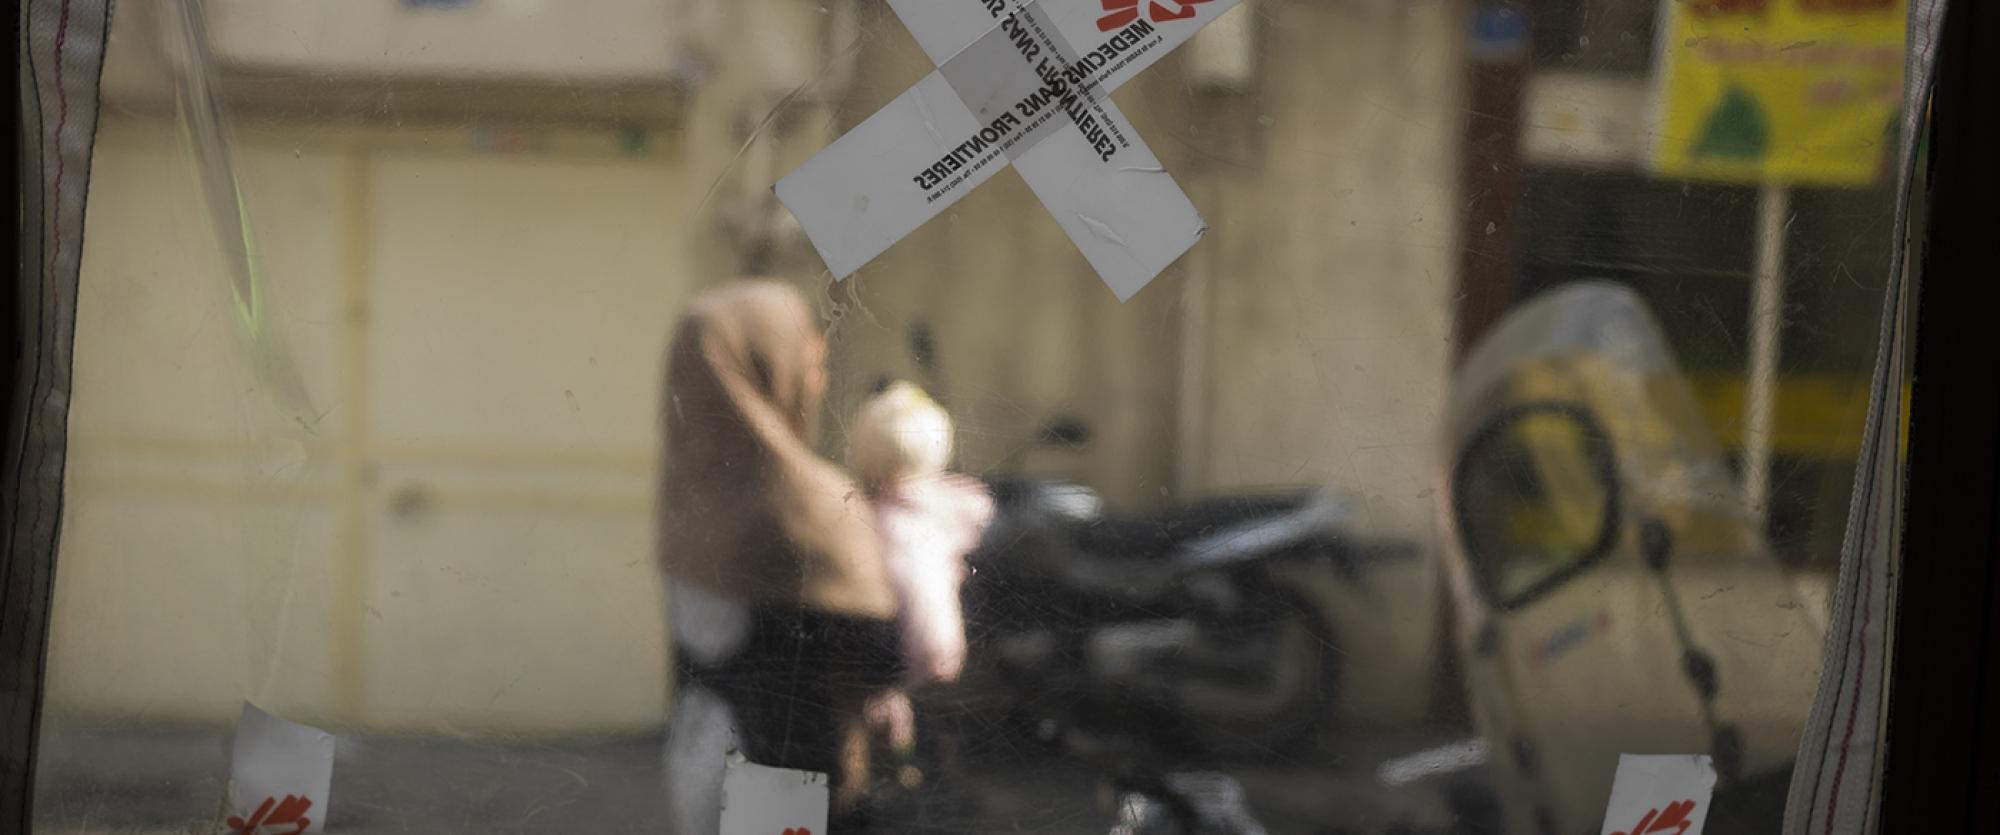 Centre de santé MSF à Téhéran, Iran. 2017 Newsha Tavakolian Magnum Photos